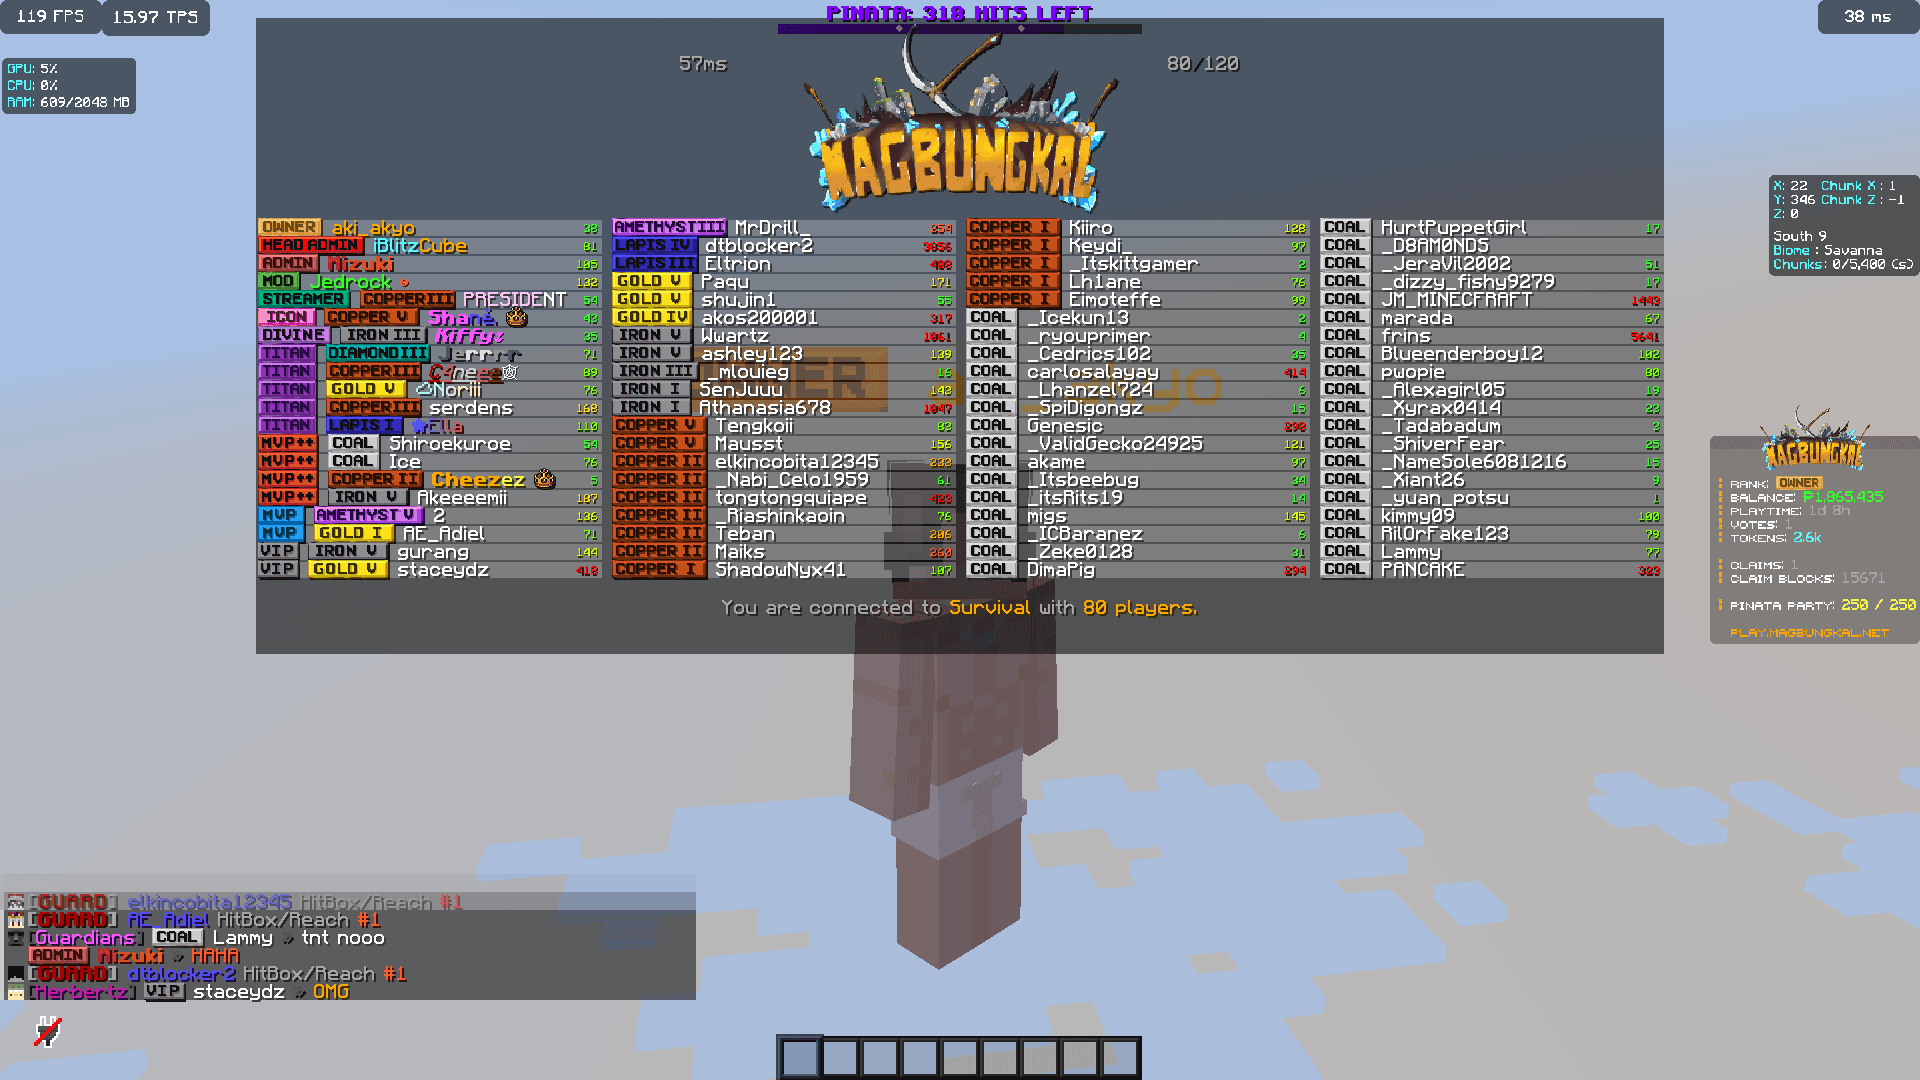 Screenshot from Magbungkal Minecraft Server